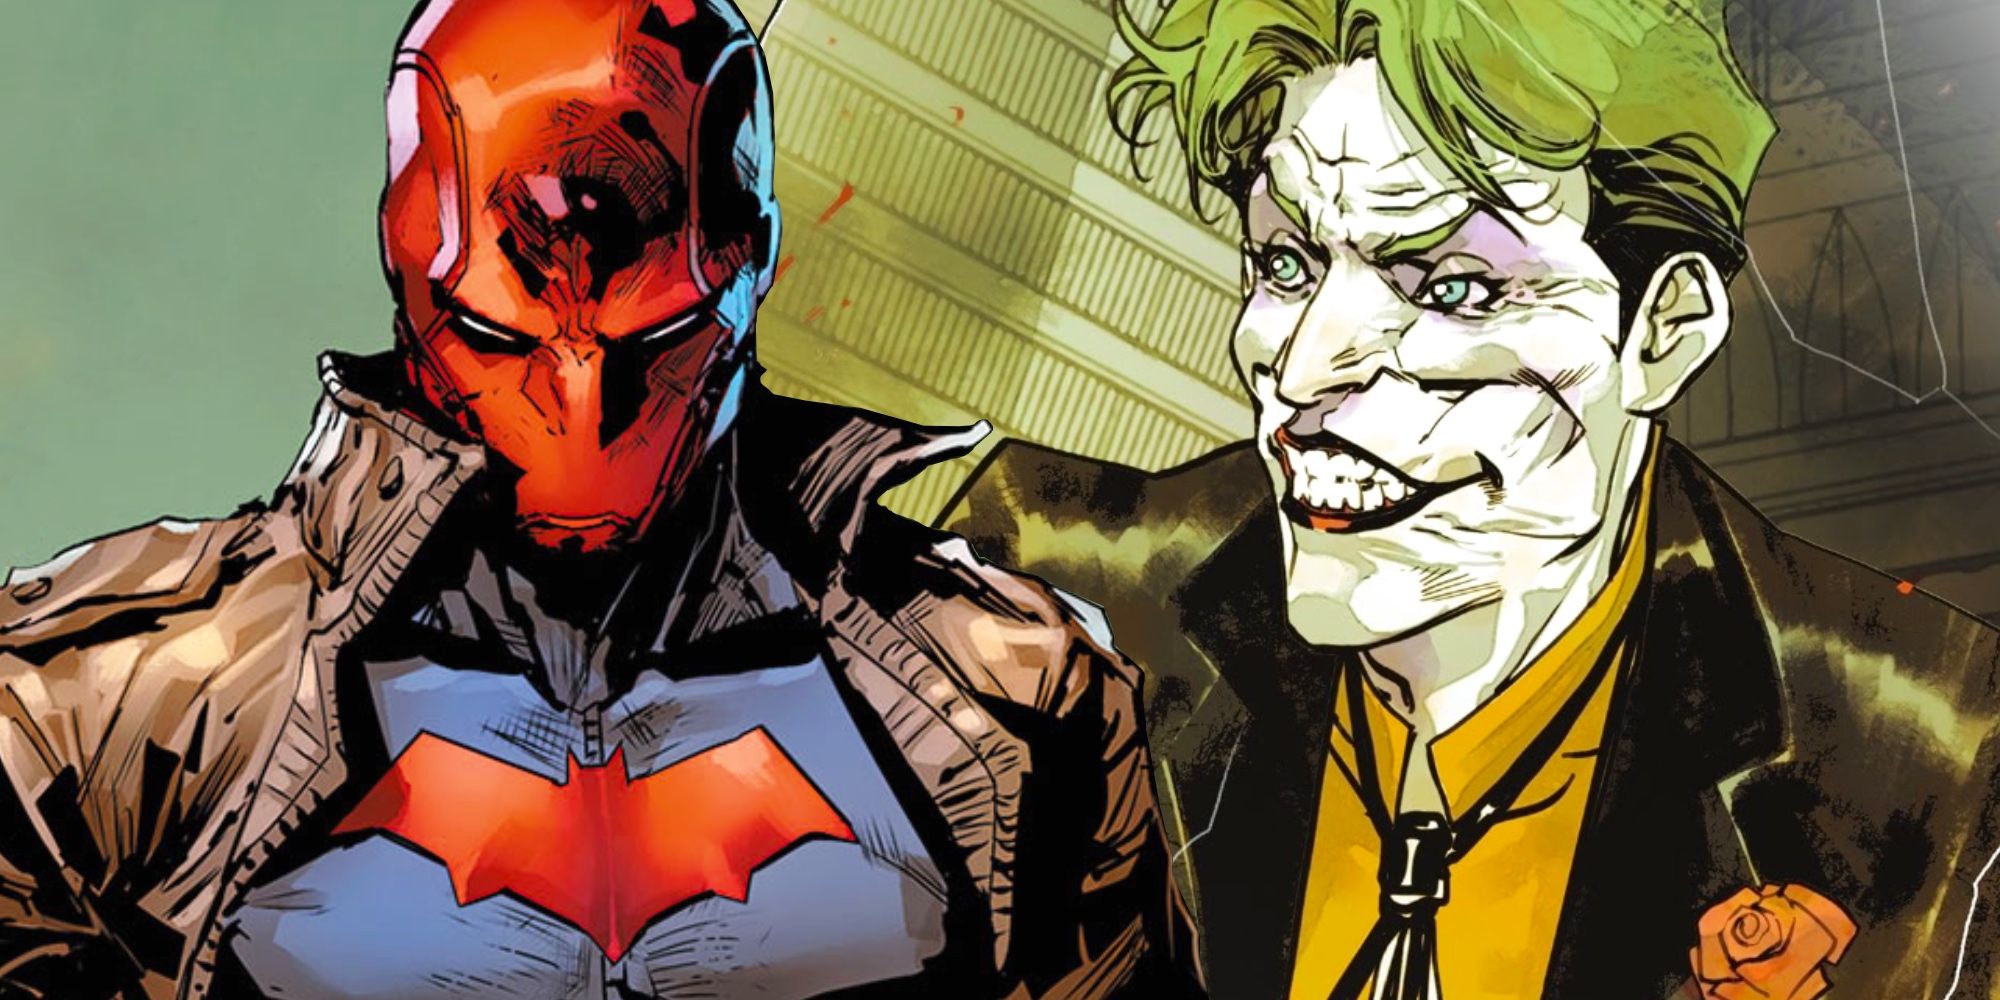 Red Hood's Revenge on Joker Deprived Another Iconic Hero of Closure